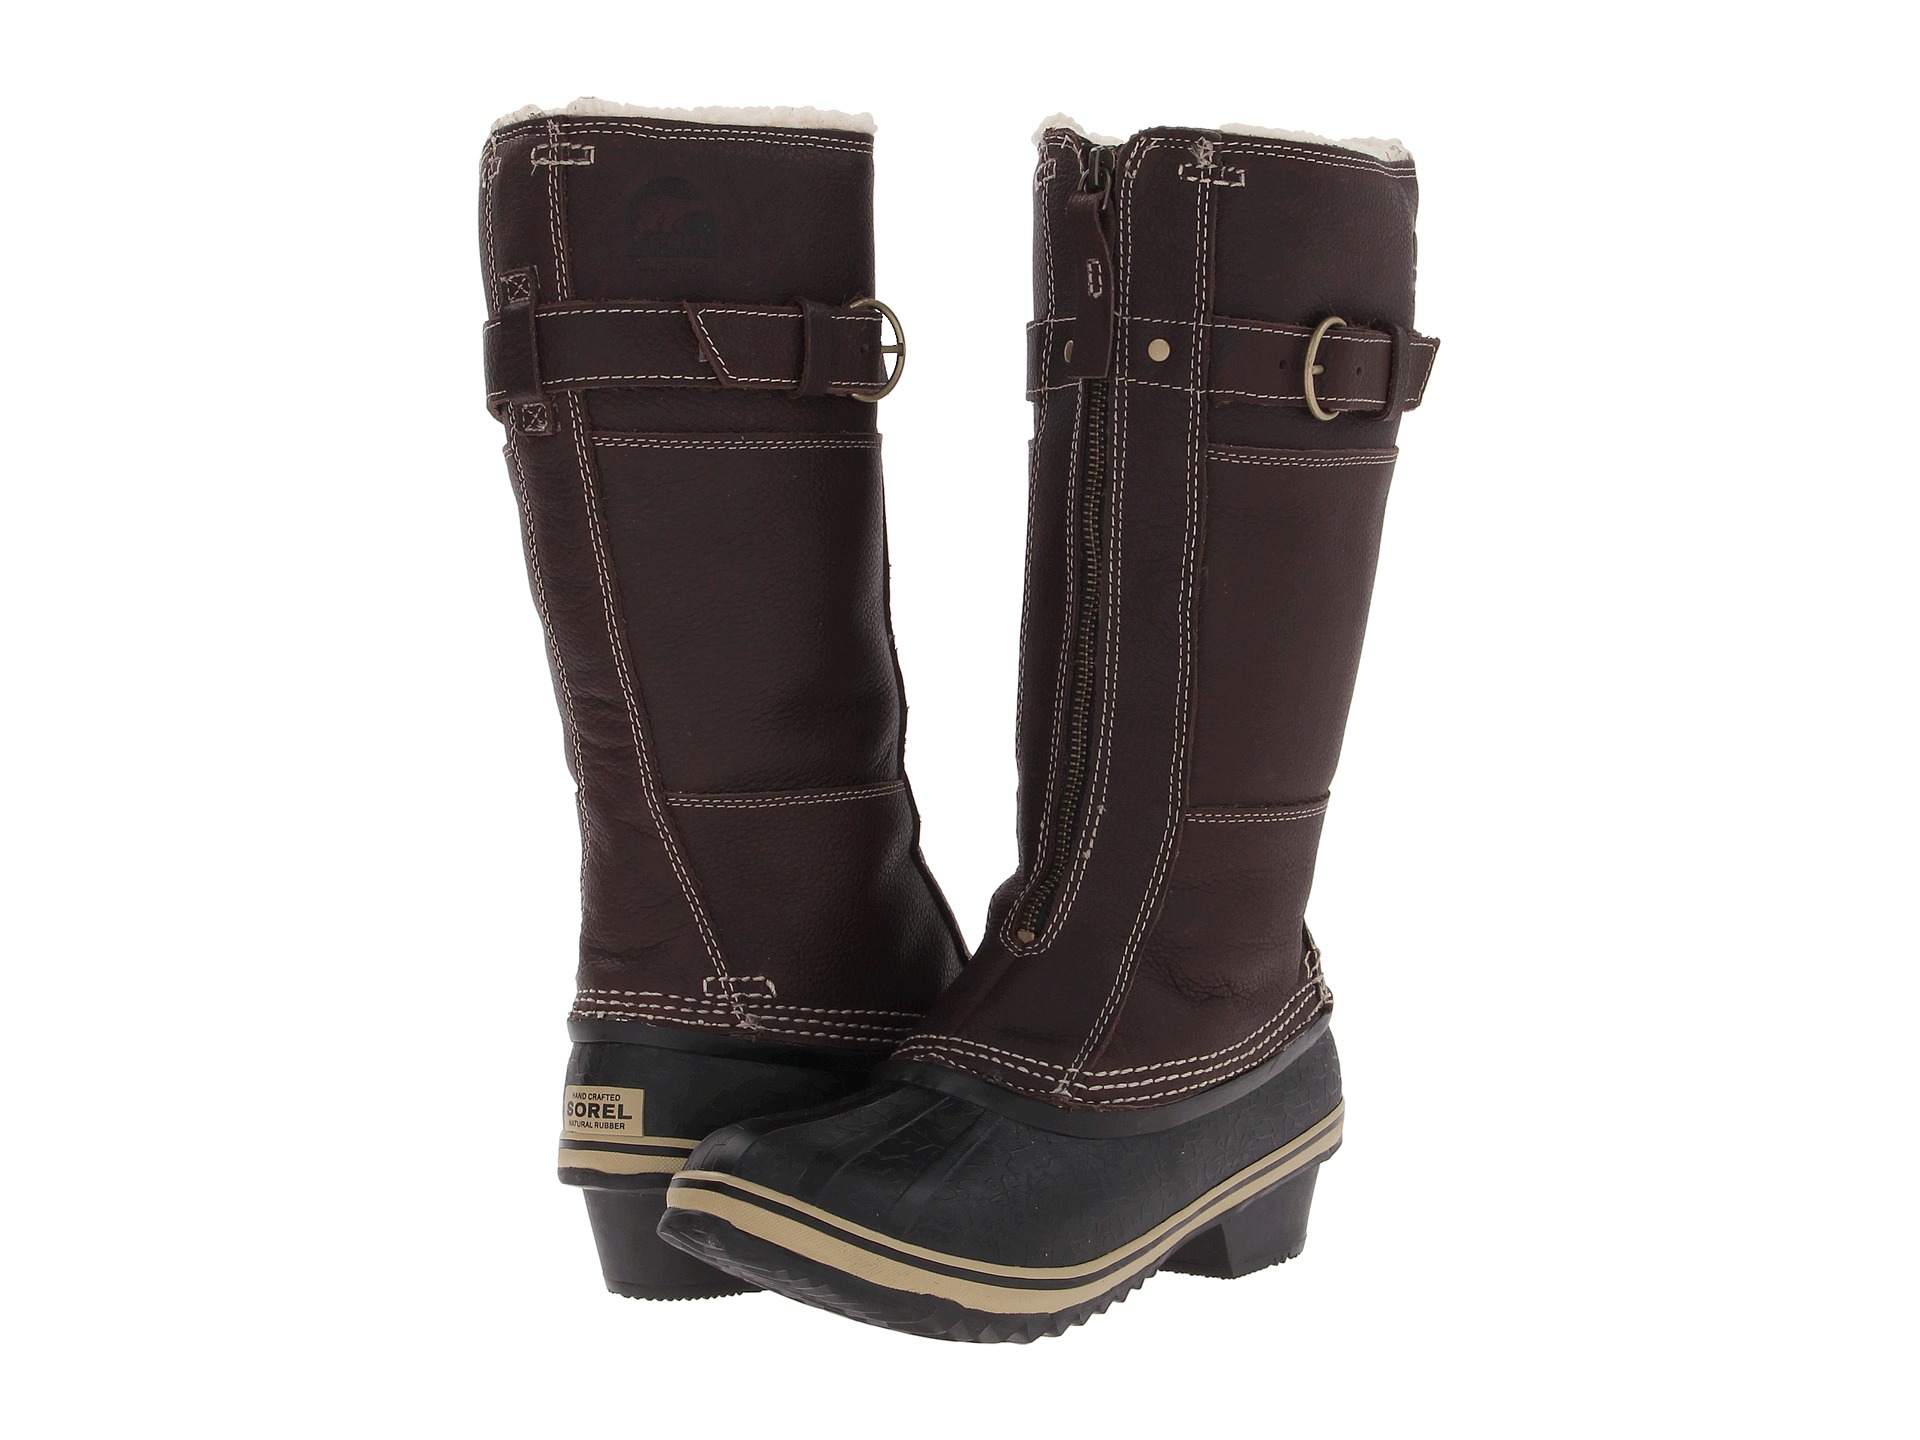 Sorel Winter Fancy Tall, Shoes, Women | Shipped Free at Zappos